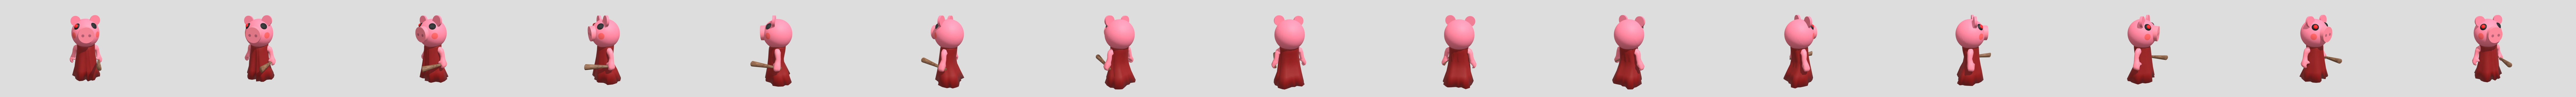 Tio piggy - Download Free 3D model by Grabplayer (@Grabplayer